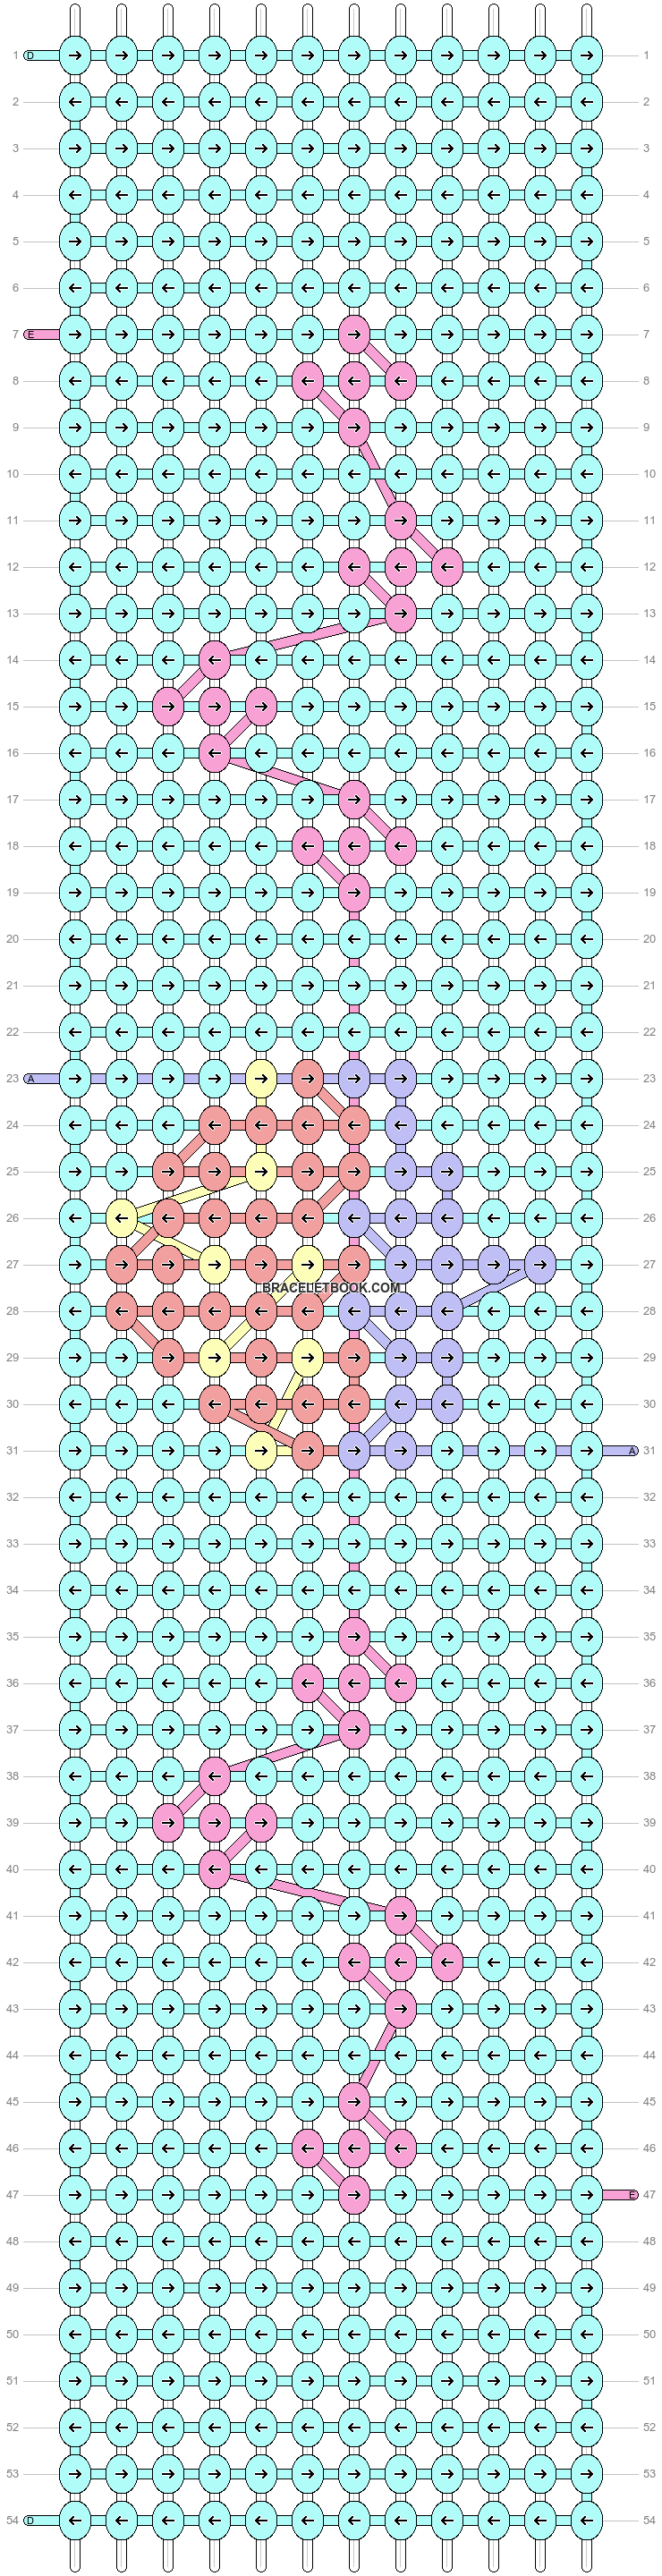 Alpha pattern #40738 variation #59304 pattern